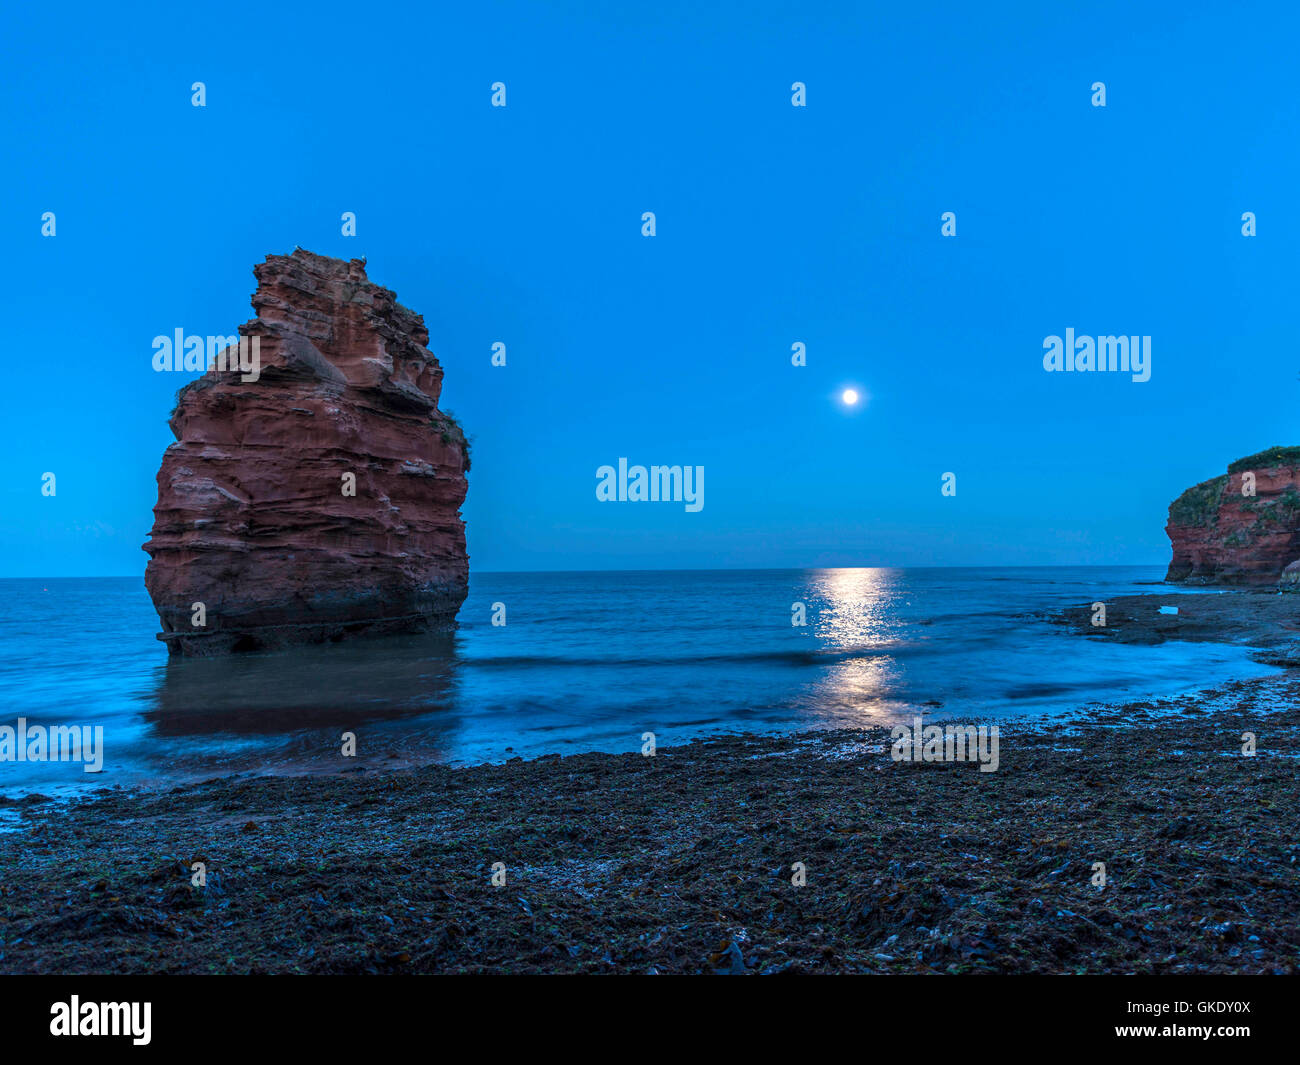 Jurassic coast rock formation by moonlight at Ladram Bay Cove, Devon Stock Photo